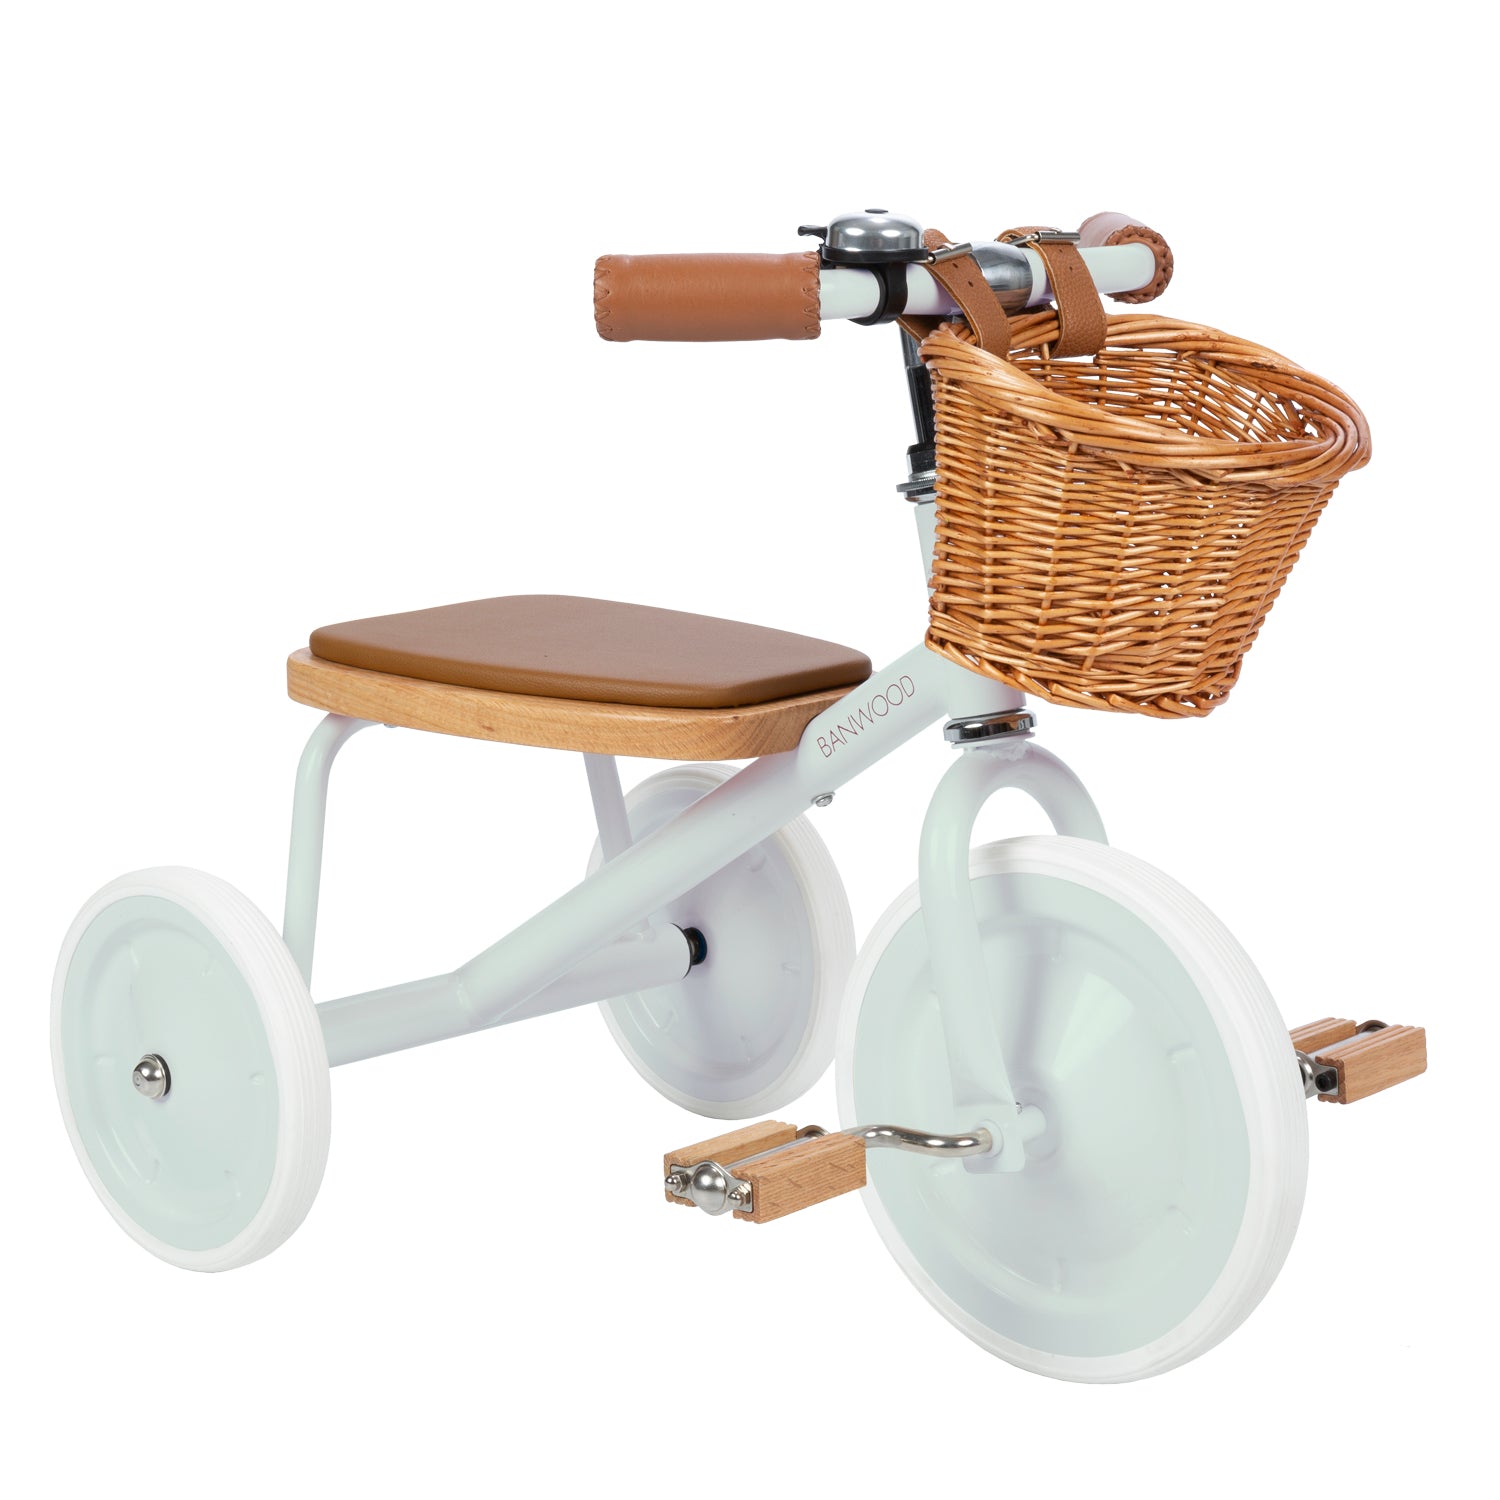 NEW Banwood Trike (and basket)- Mint